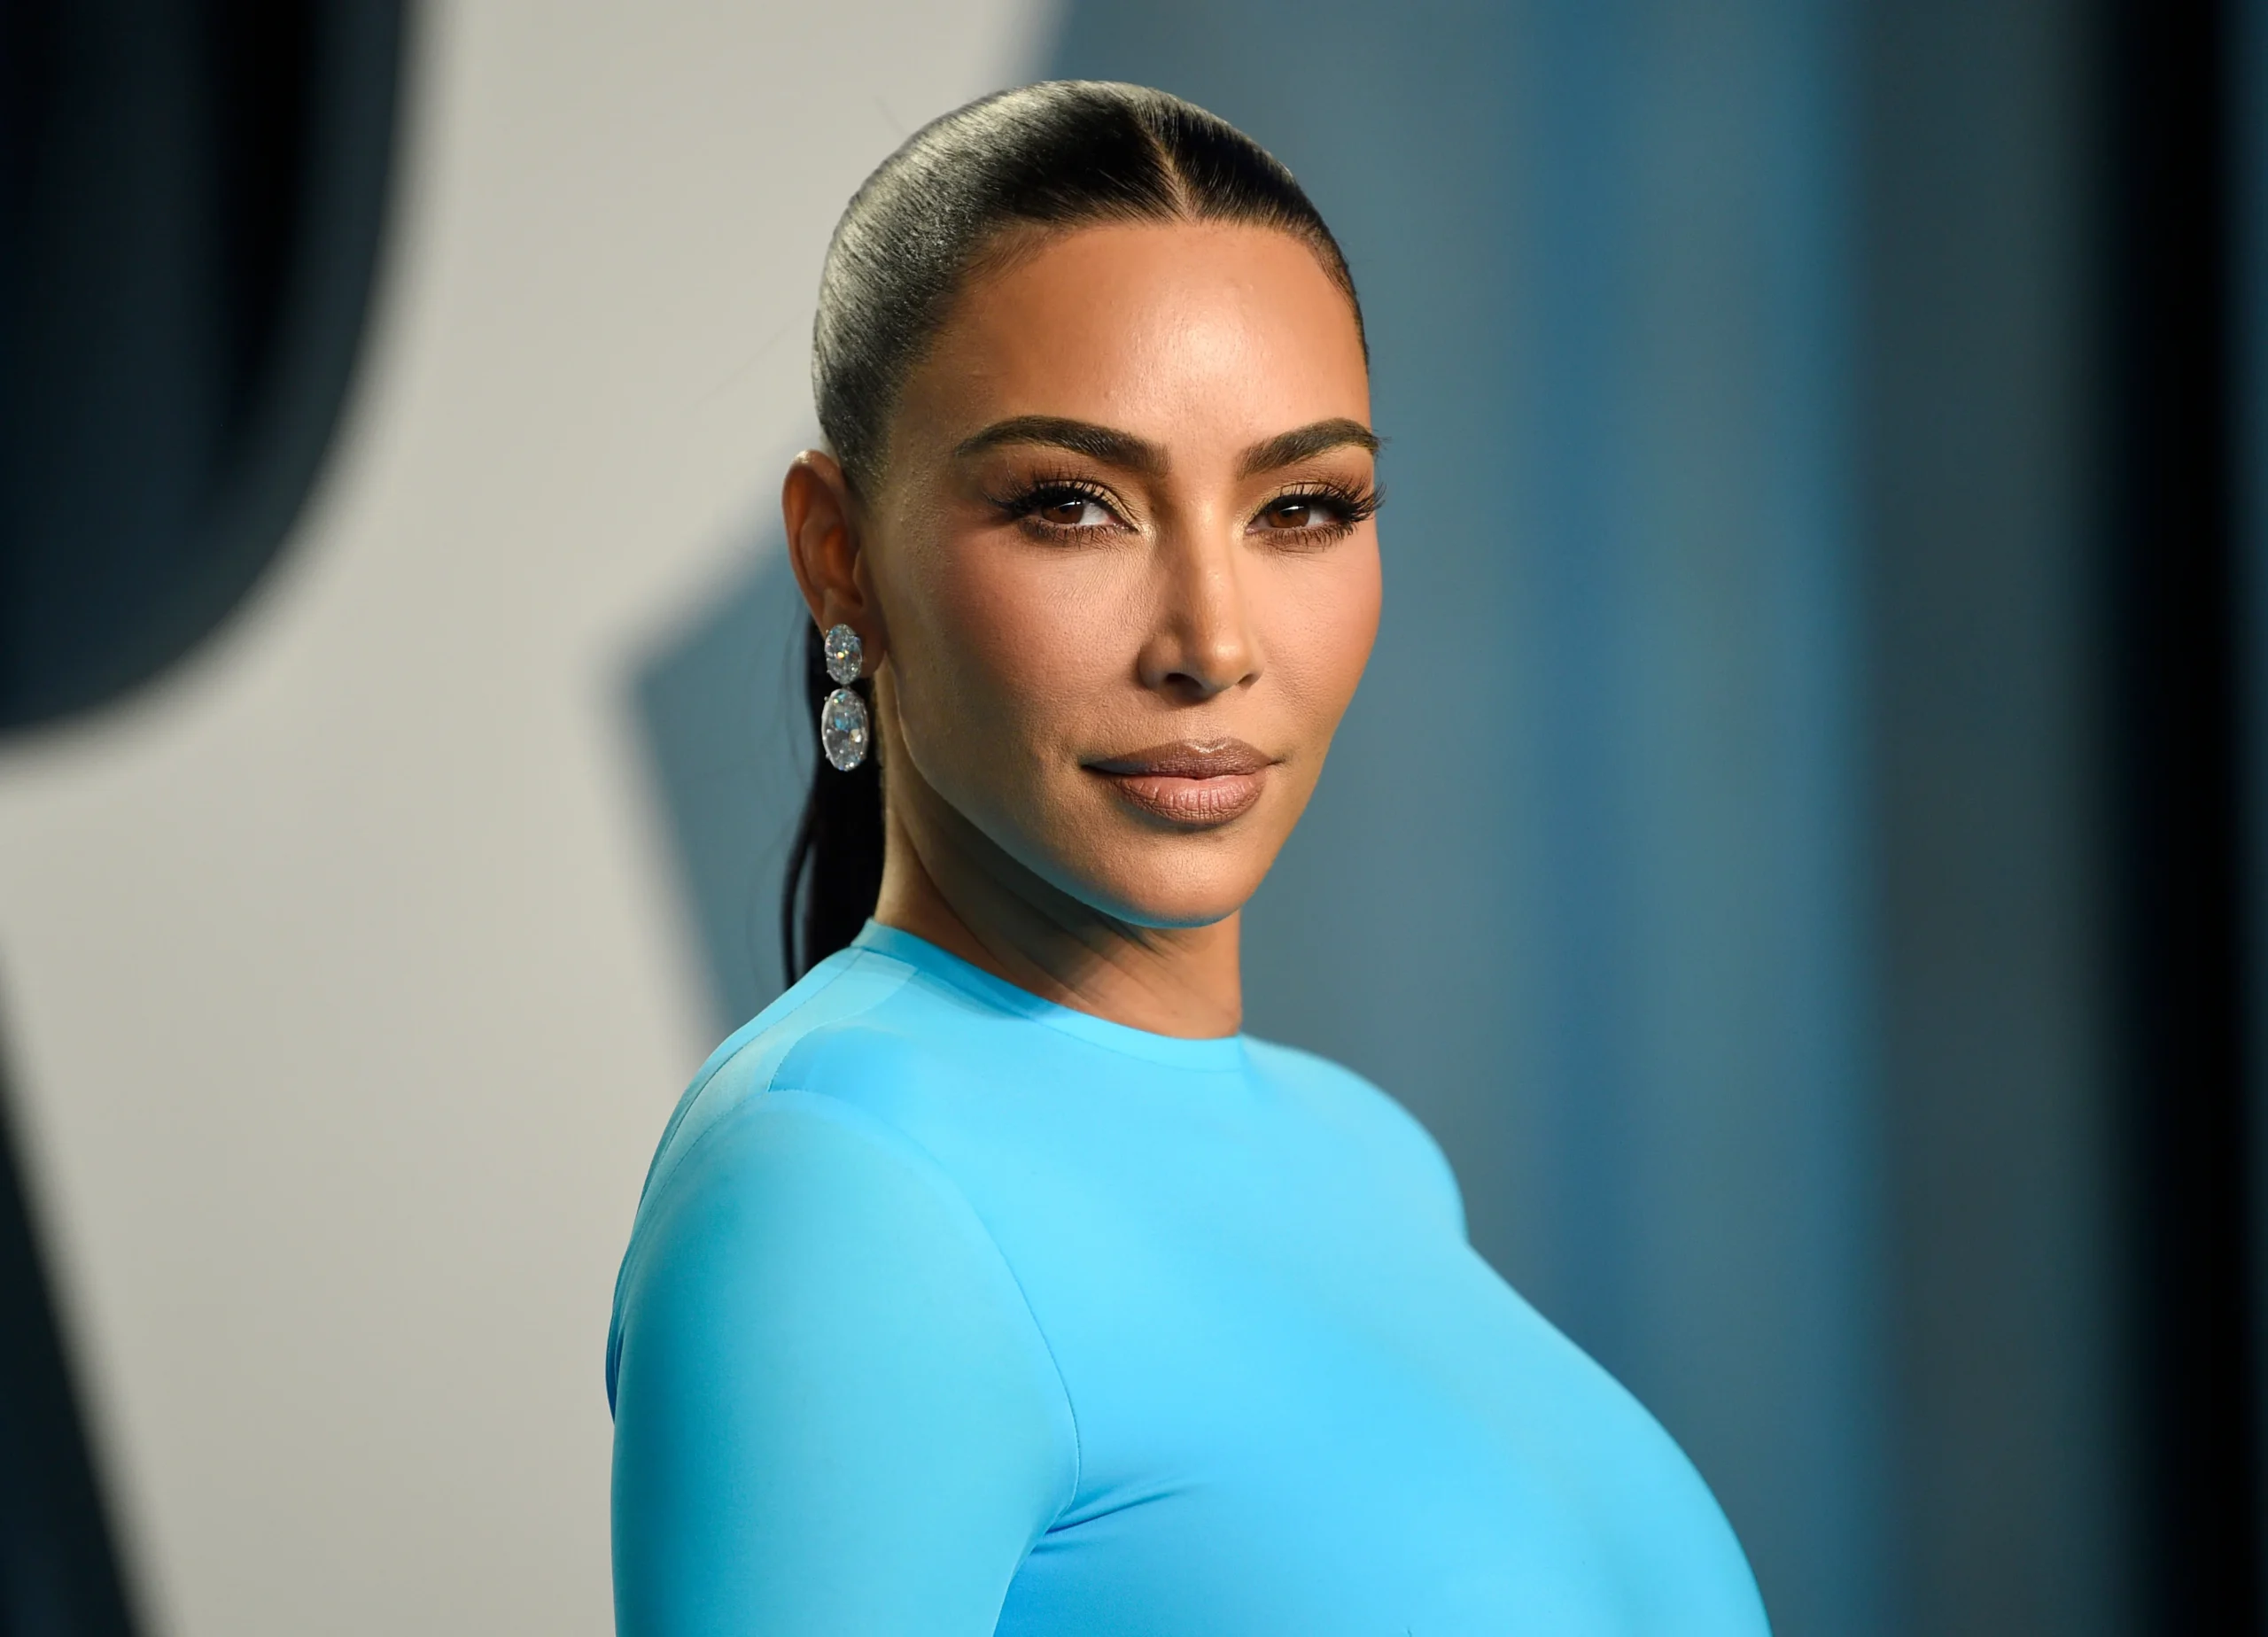 Kim Kardashian: Biography, Family, Age, Boyfriend, Careers, Net Worth